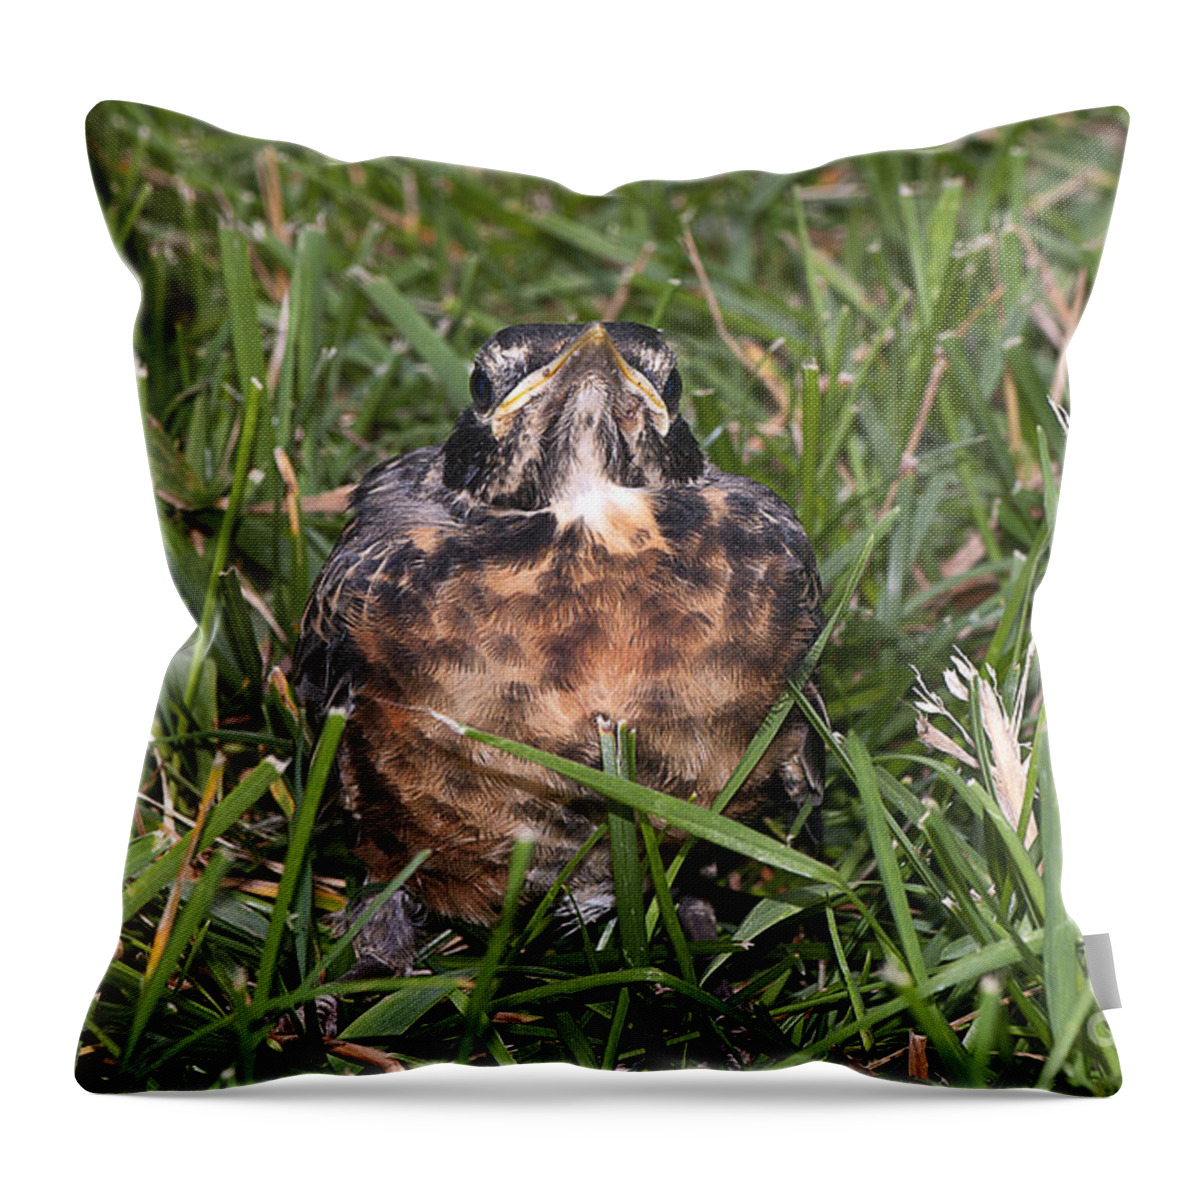 Bird Throw Pillow featuring the photograph Baby Robin by Scott Camazine